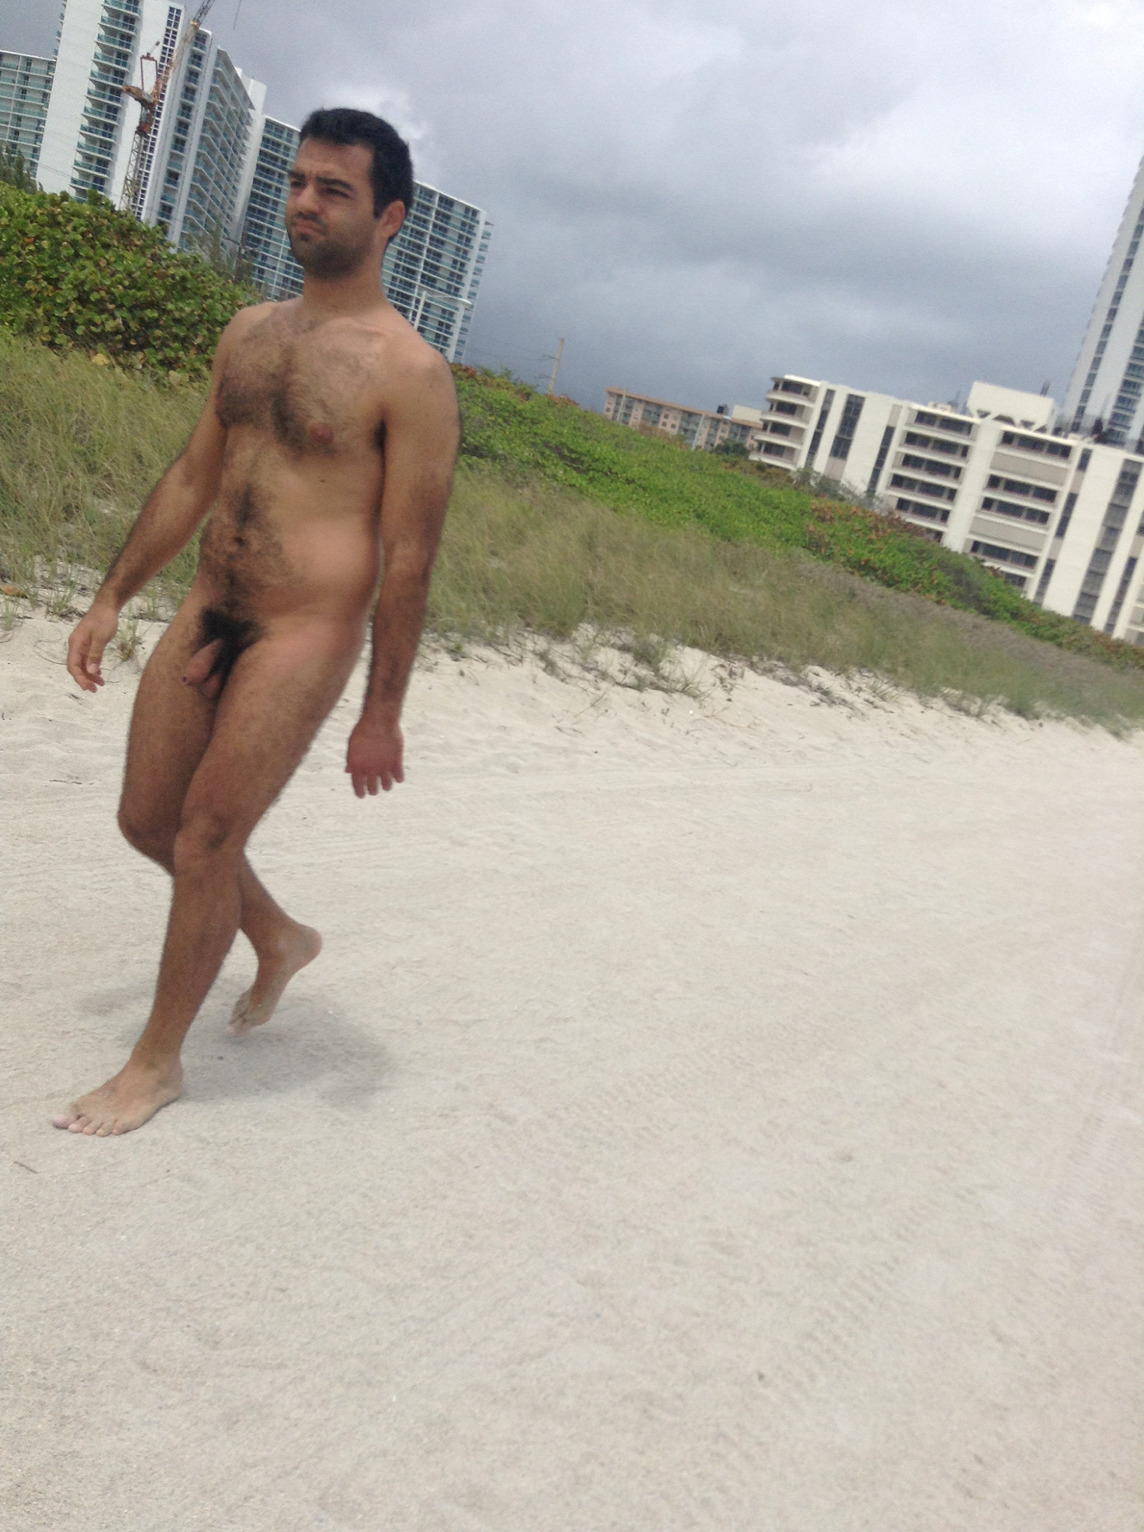 November 16, 2013   Strolling Nude
Naked beach